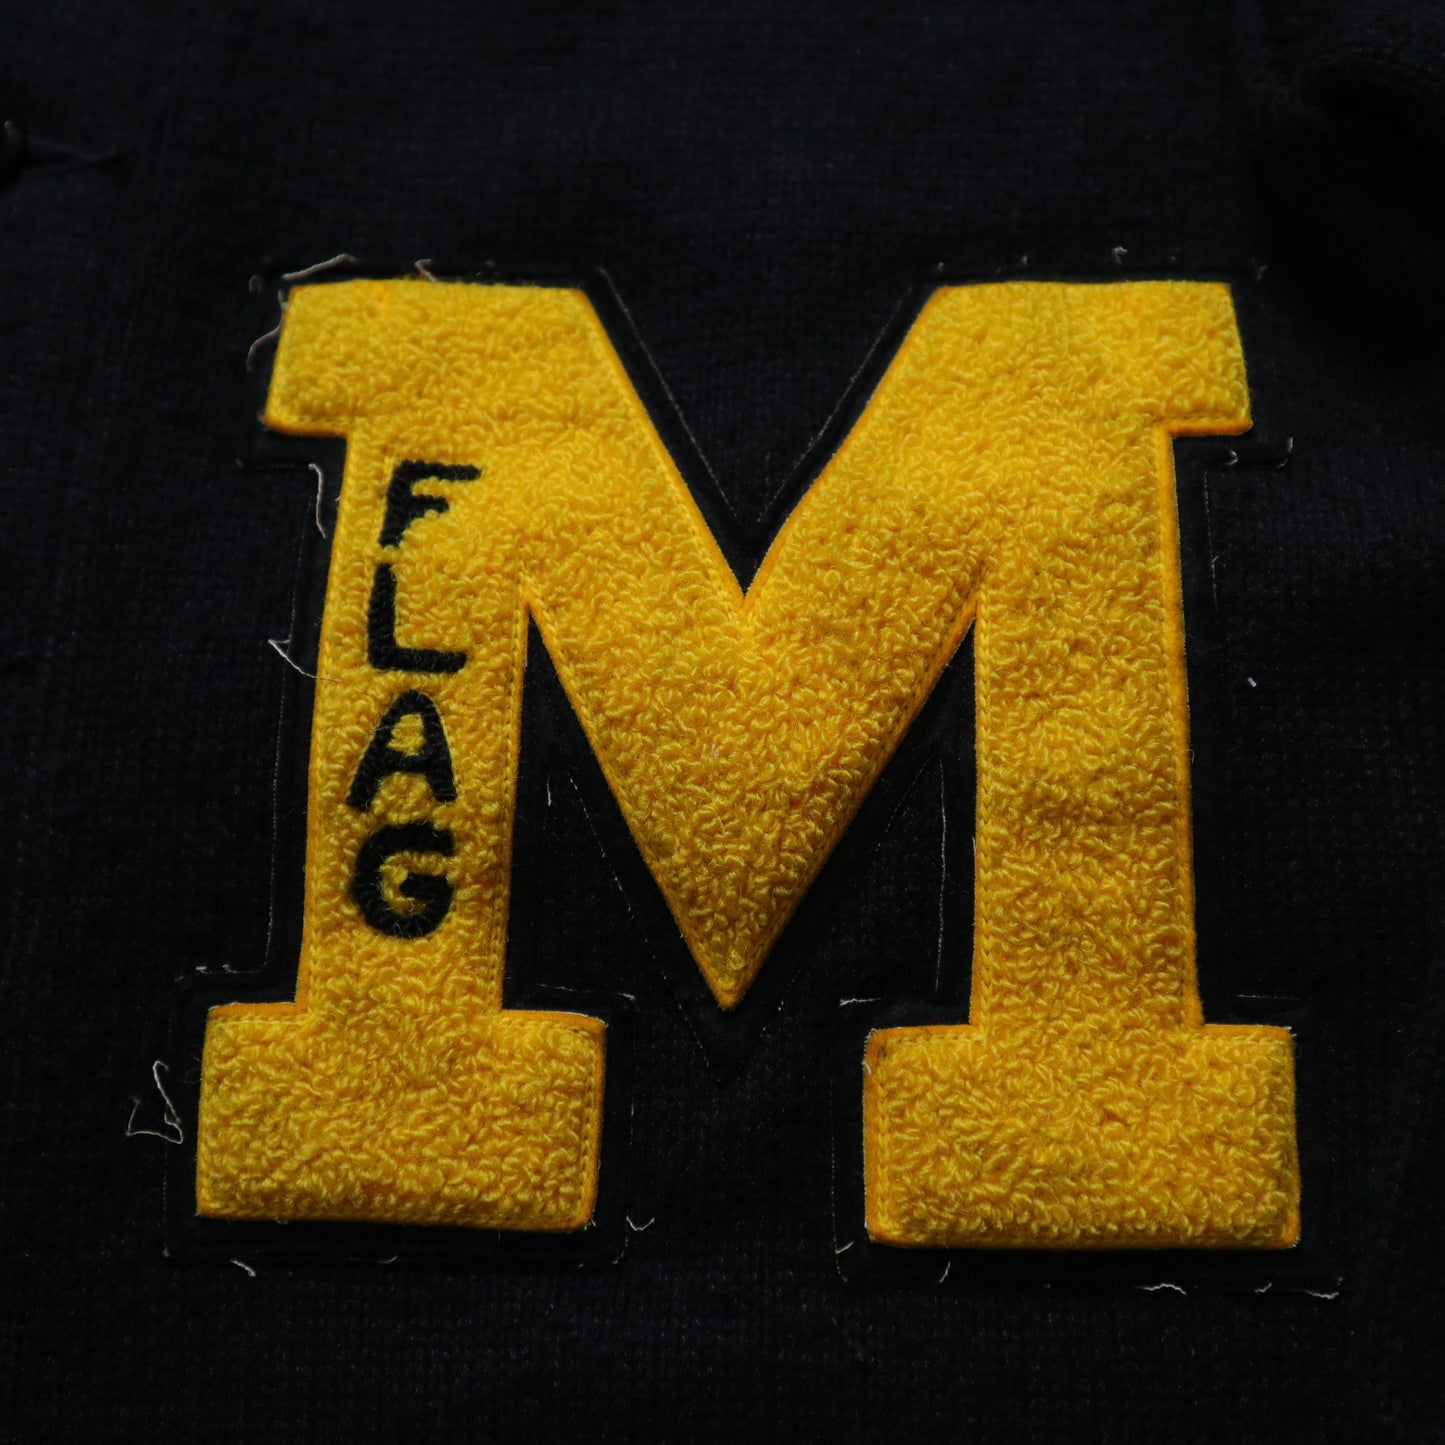 1970s Dehem Varsity Cardigan patch “M” Murray State University black campus knitted jacket